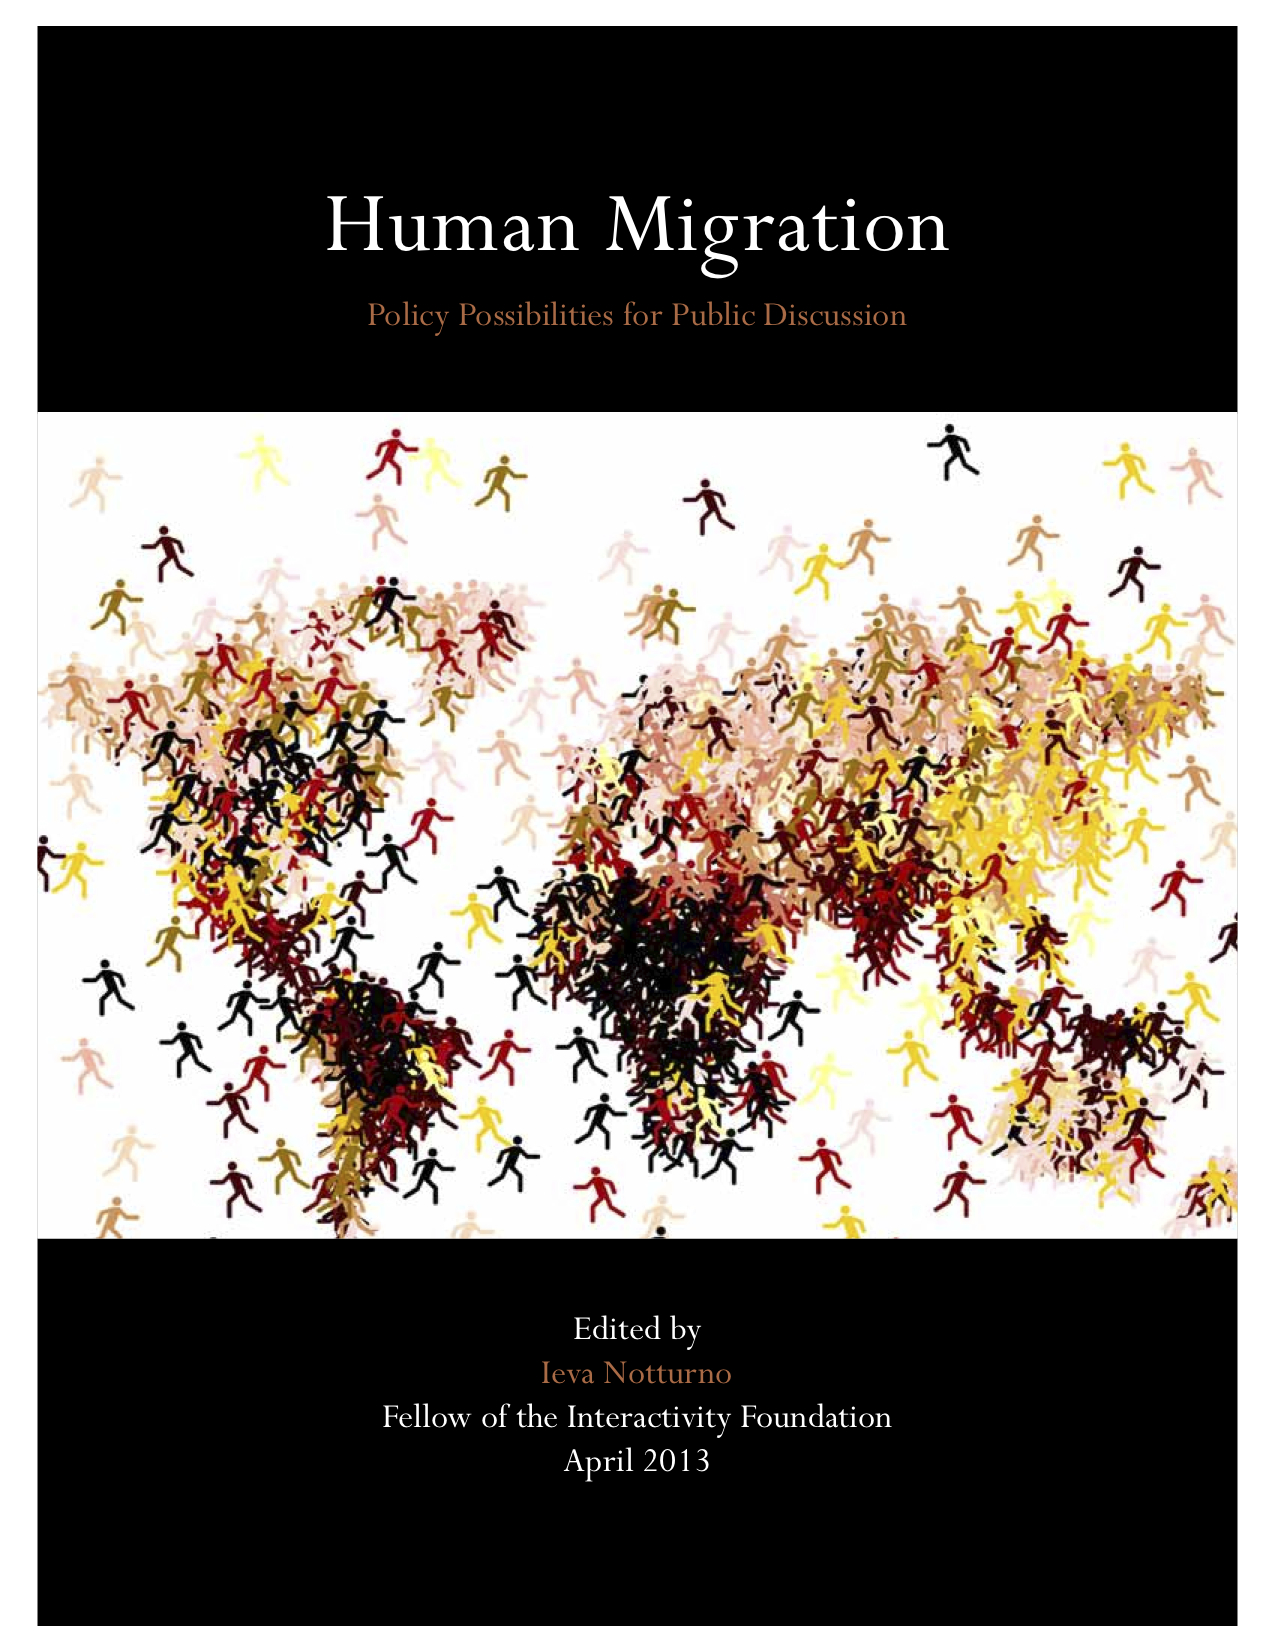 speech on human migration